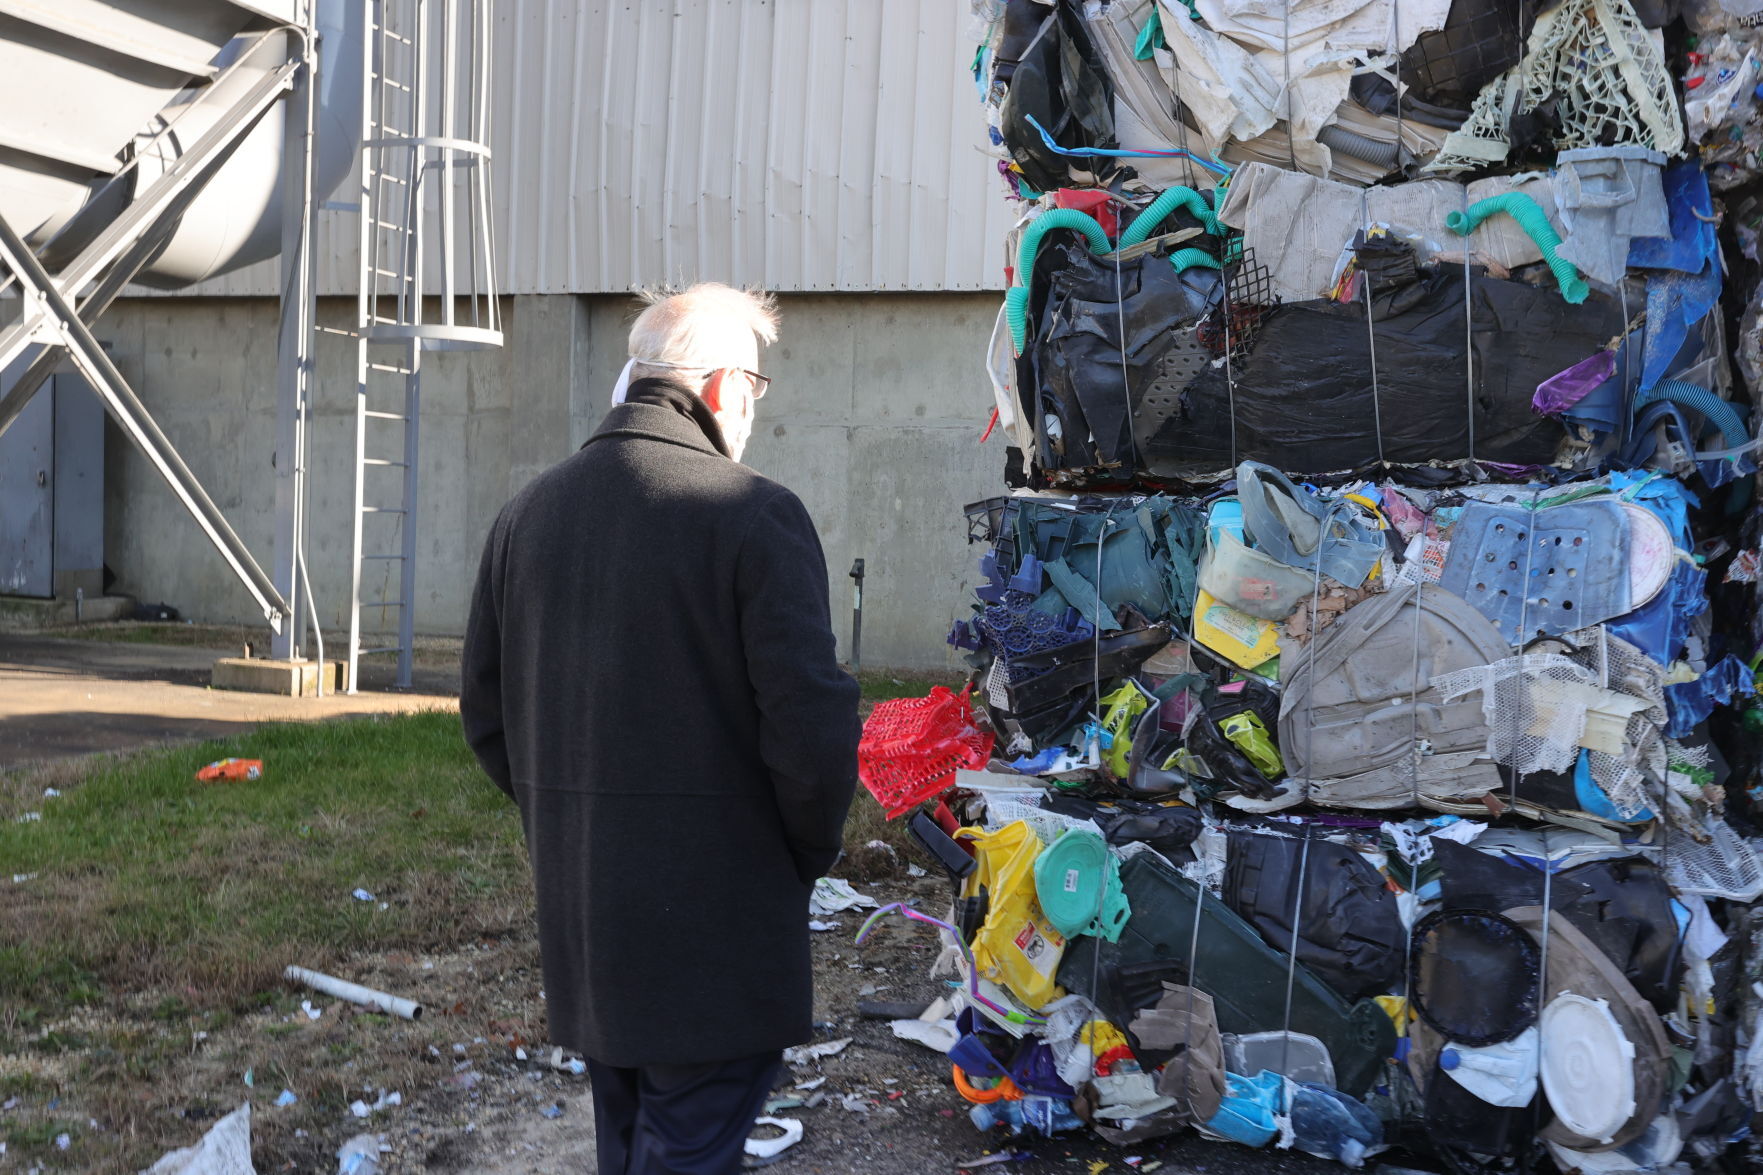 edison township garbage collection 2021